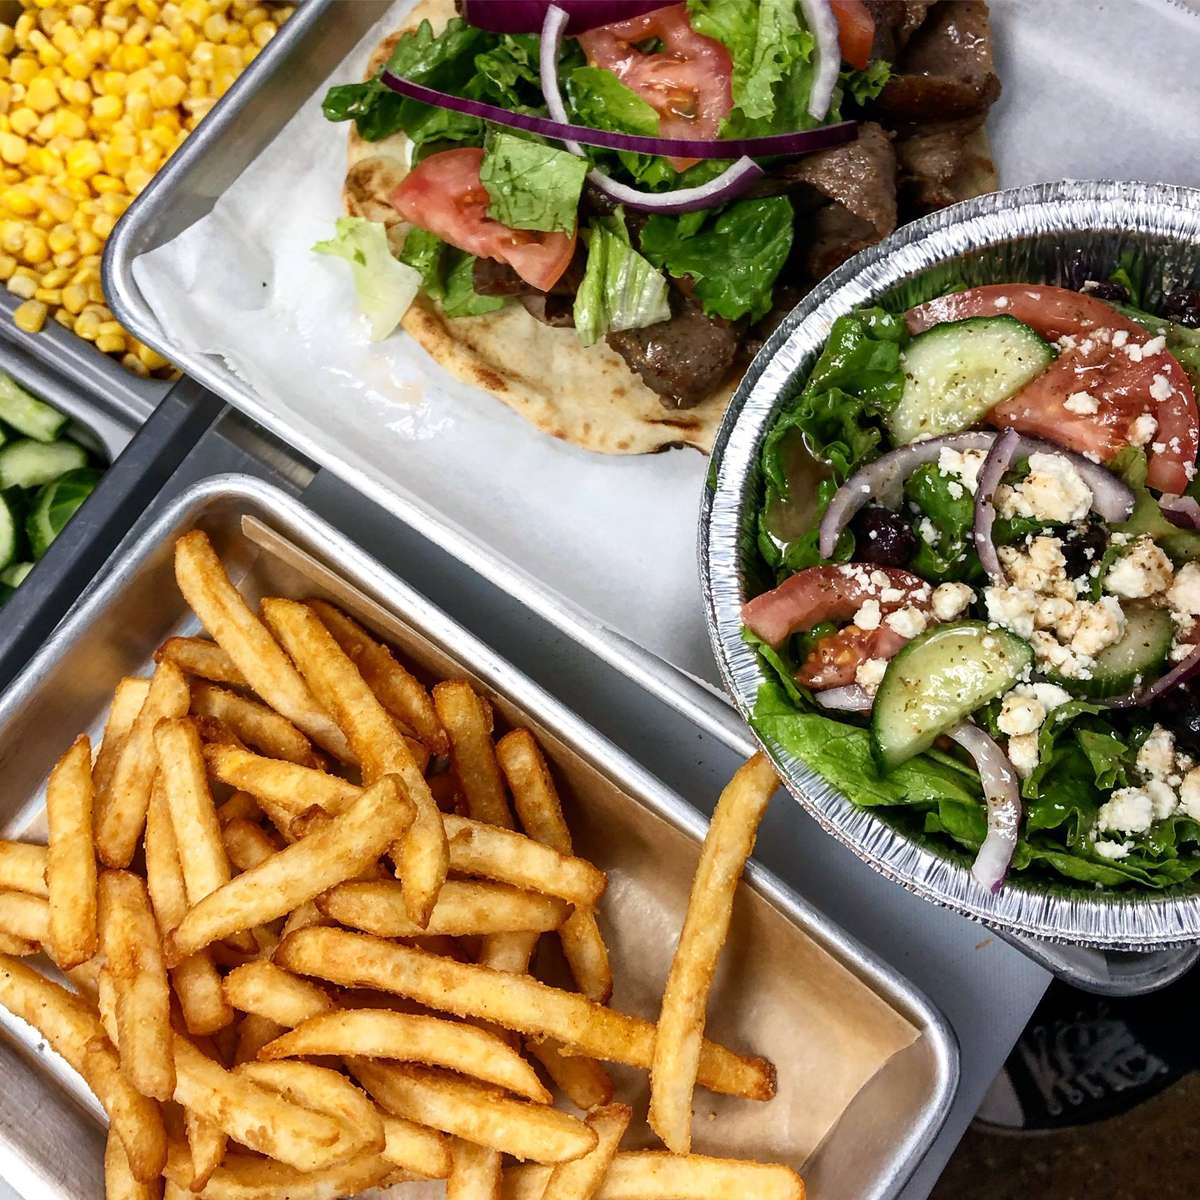 Greek salad and fries